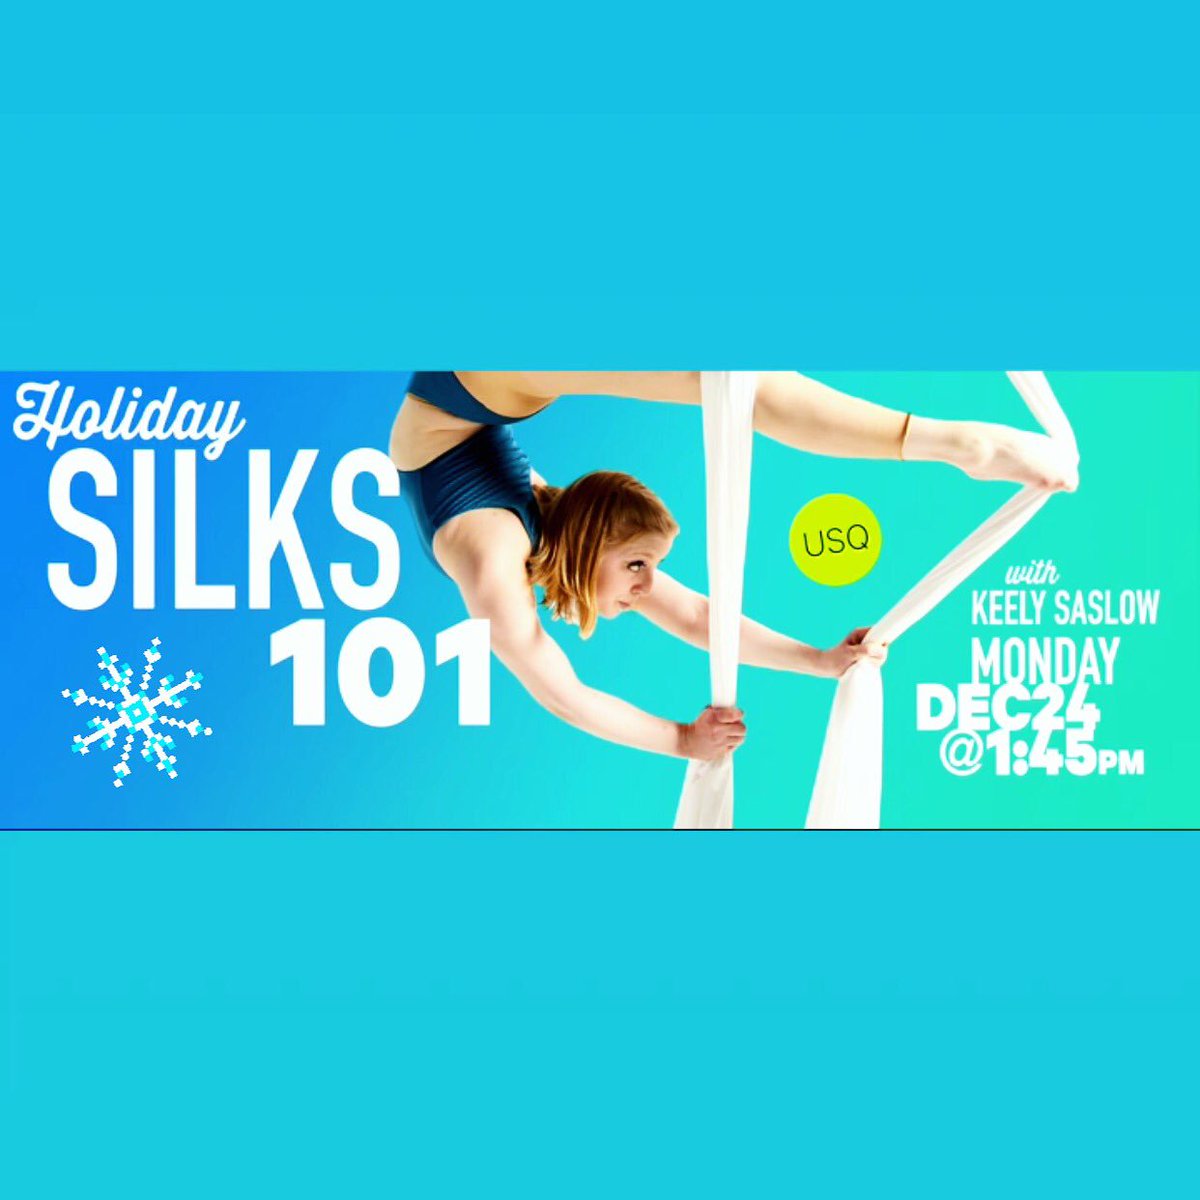 Christmas Eve Silks 101!!!
.
Monday, 12/24
1:45-3:15pm Silks 101 Holiday Workshop with @keelsnpeels .
#allfunnofear #welcomehOMe #circusact #nycfitness #fitnessjunkie #fitnessgoals #workoutoftheday #lifeupsidedown #omfactorynyc